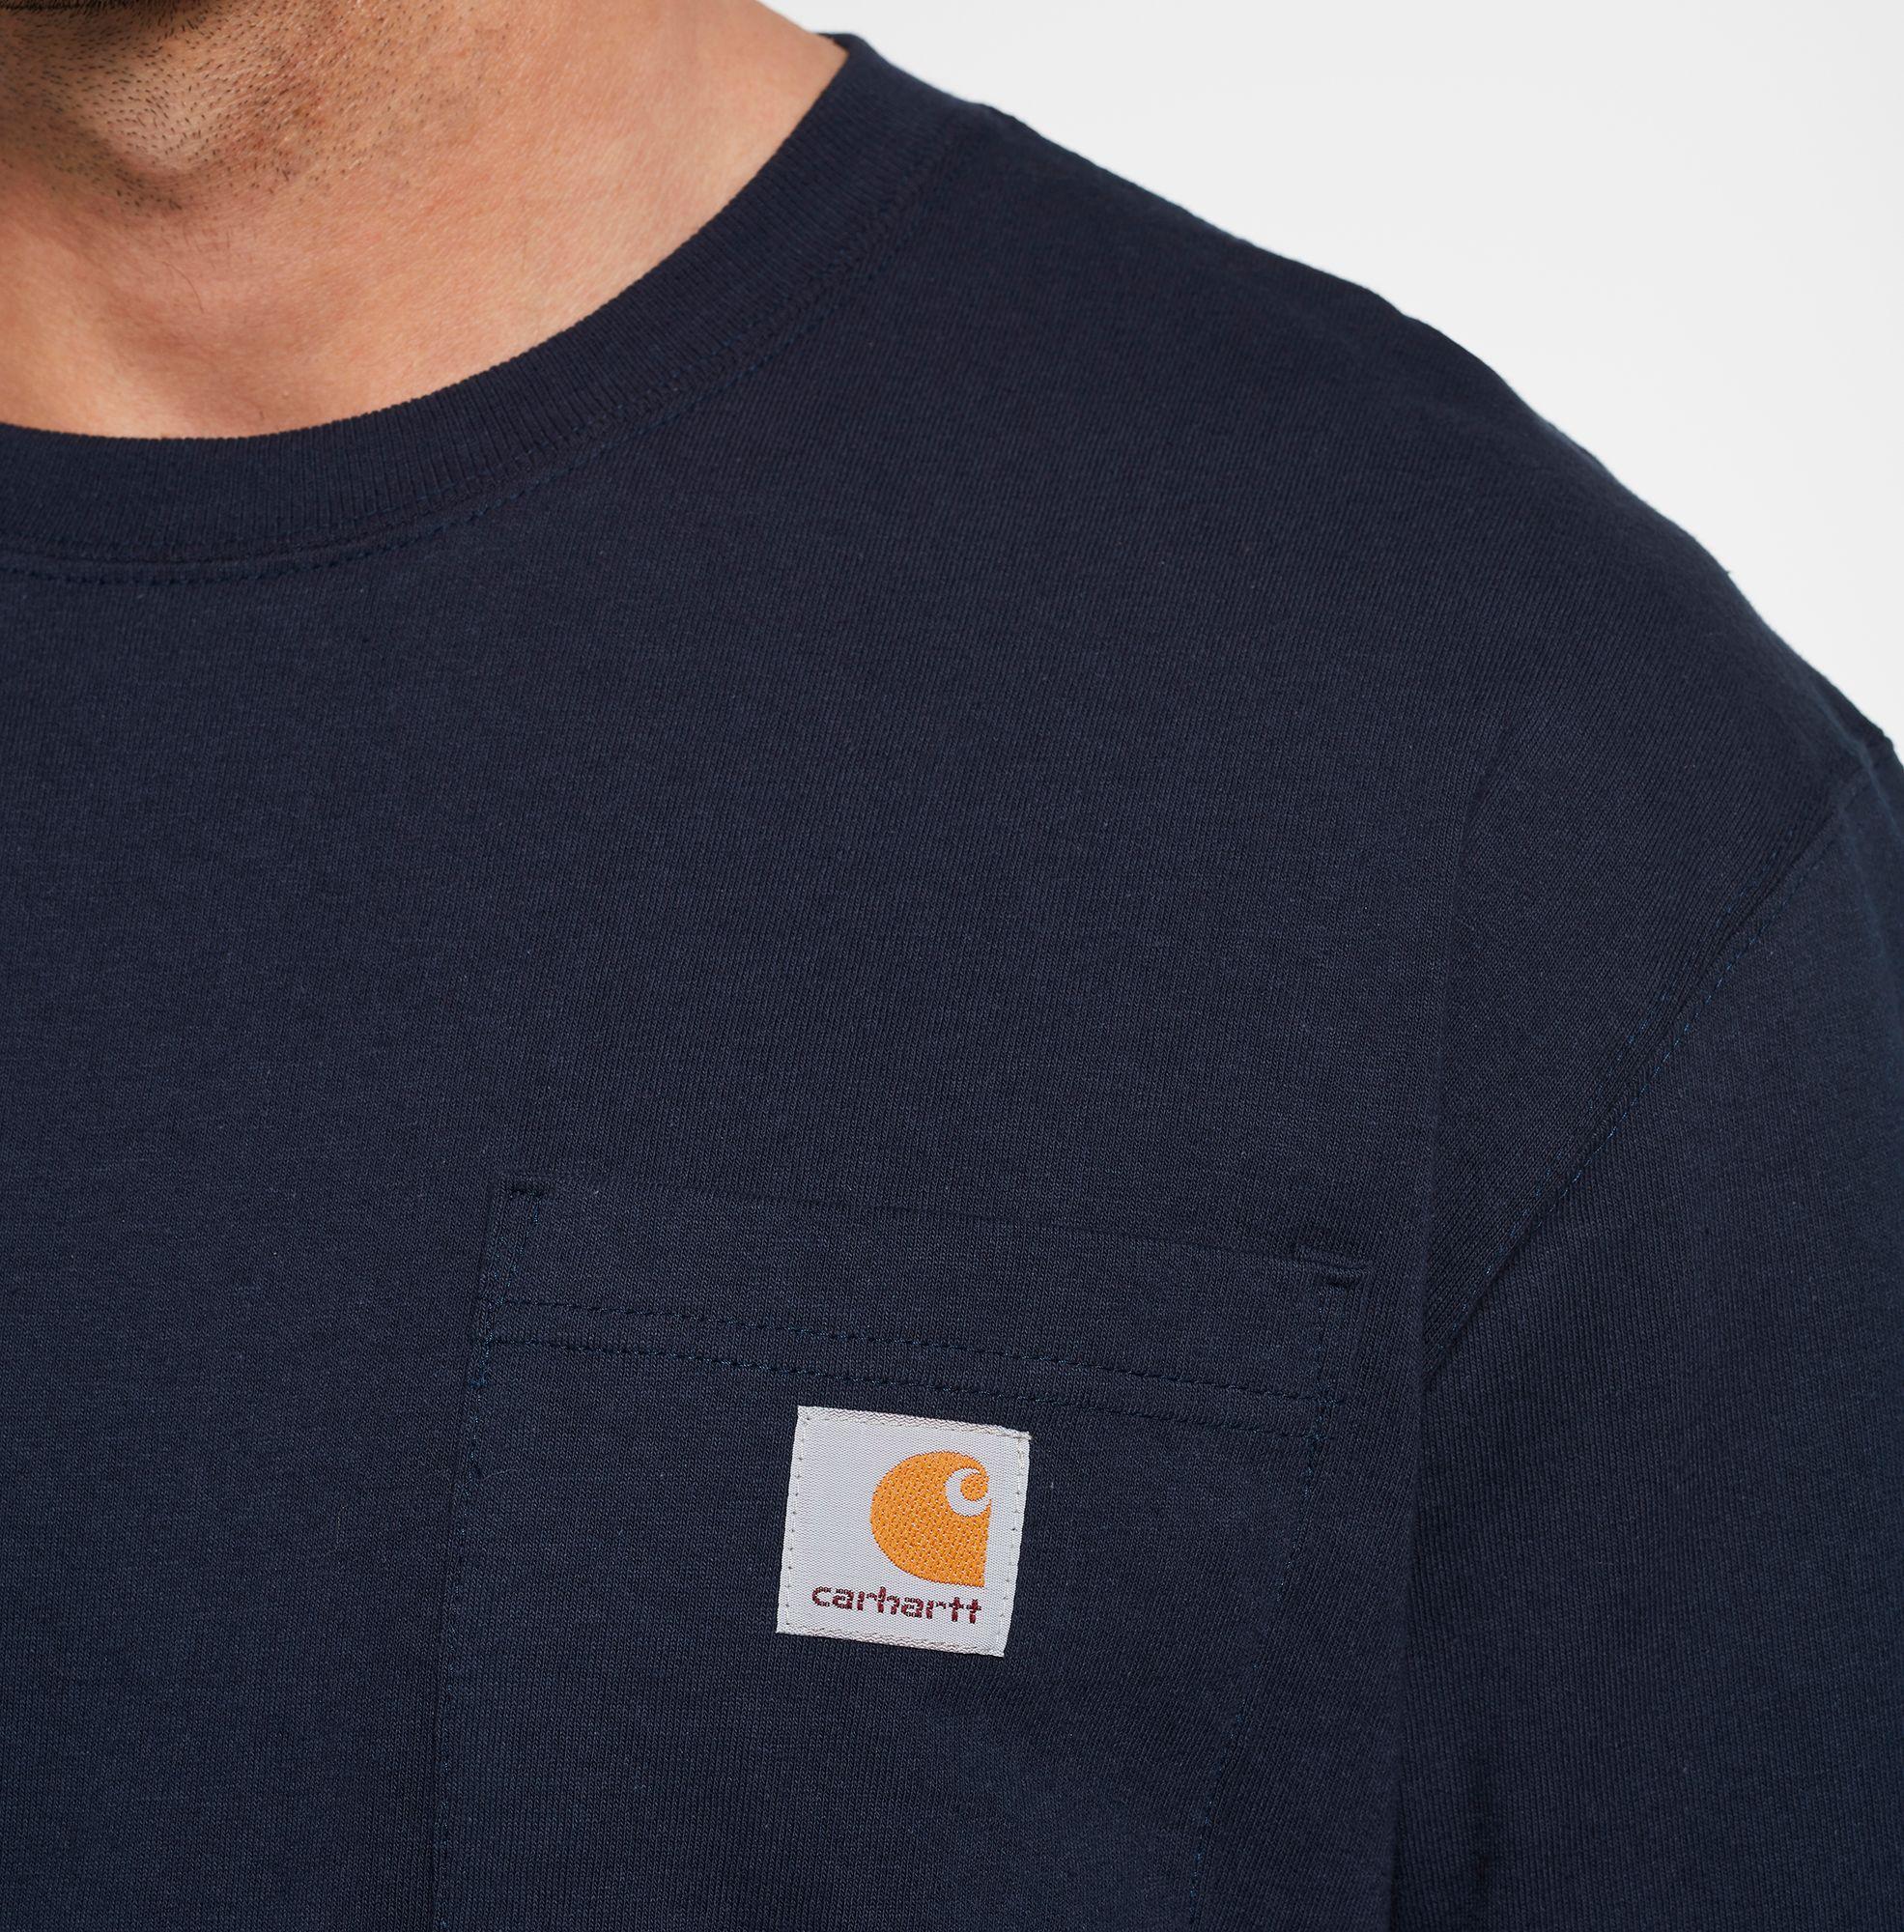 Carhartt Cotton Workwear T-shirt in Navy (Blue) for Men - Lyst